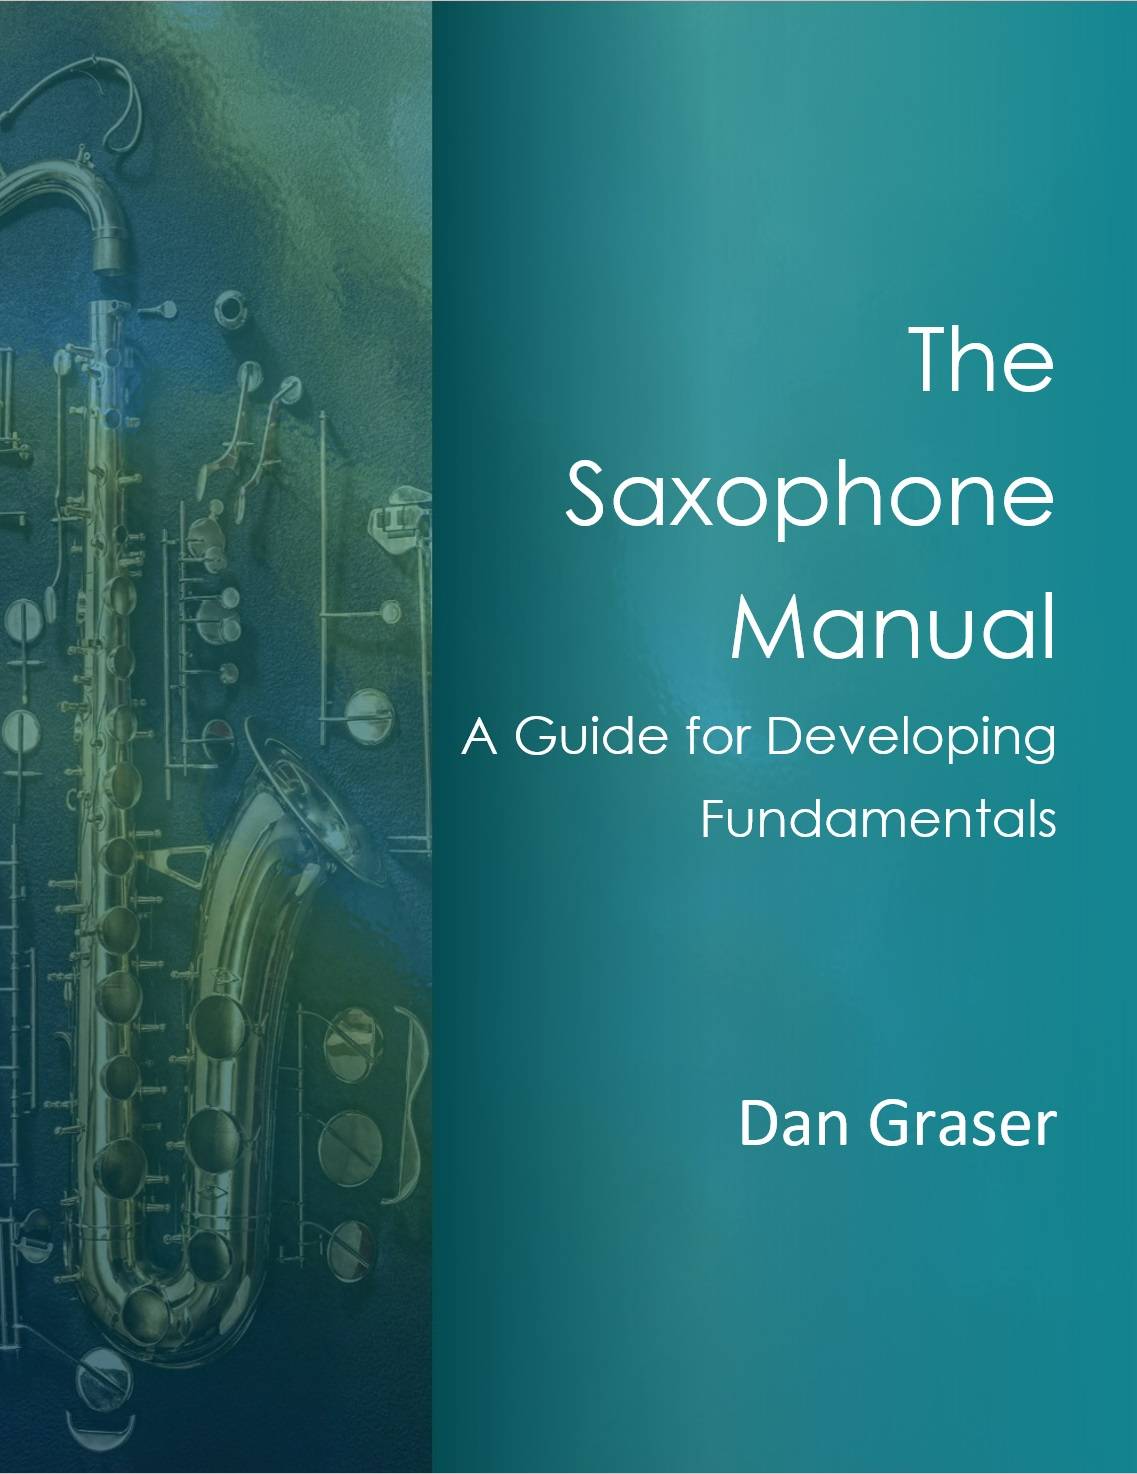 The Saxophone Manual